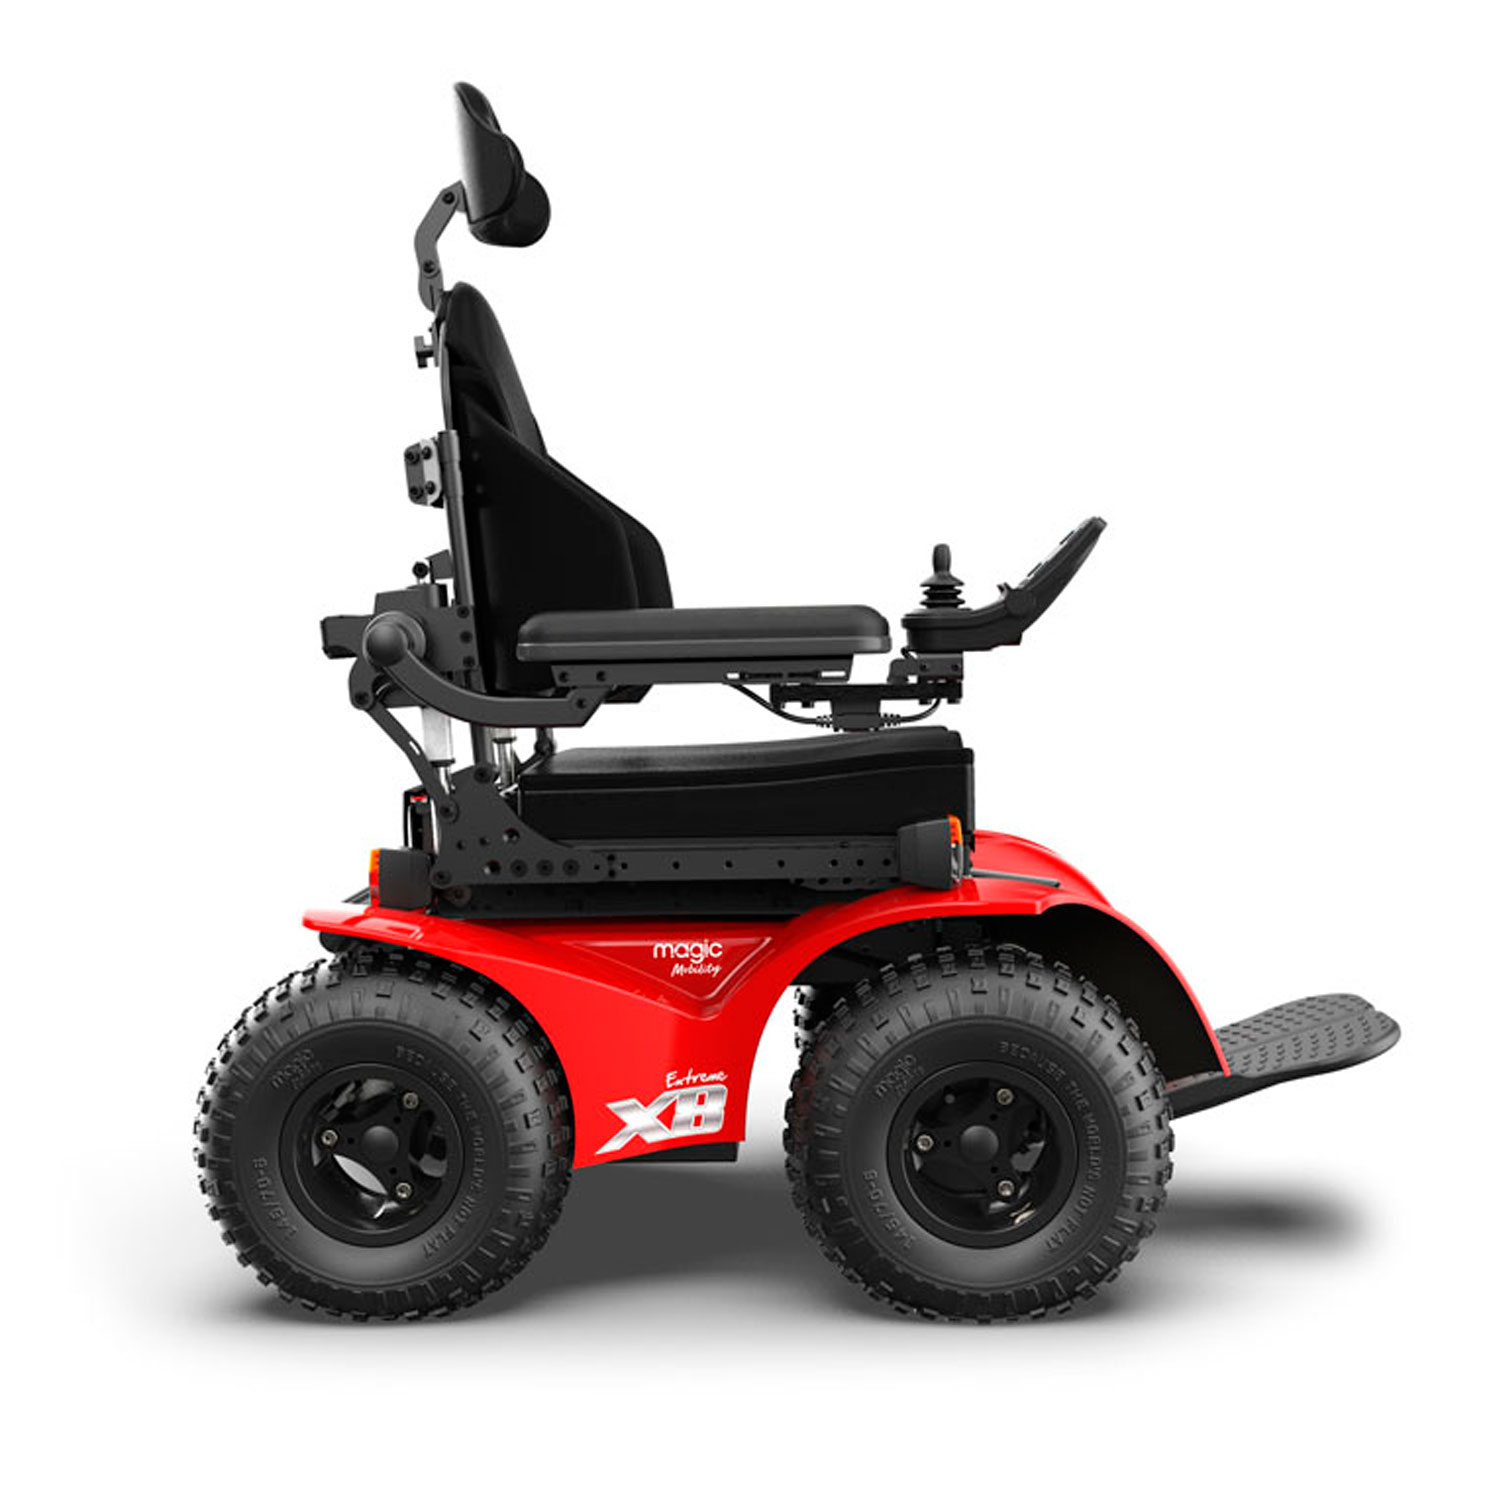 MAGIC_MOBILITY Magic Mobility Extreme X8 4x4 Power Wheelchair